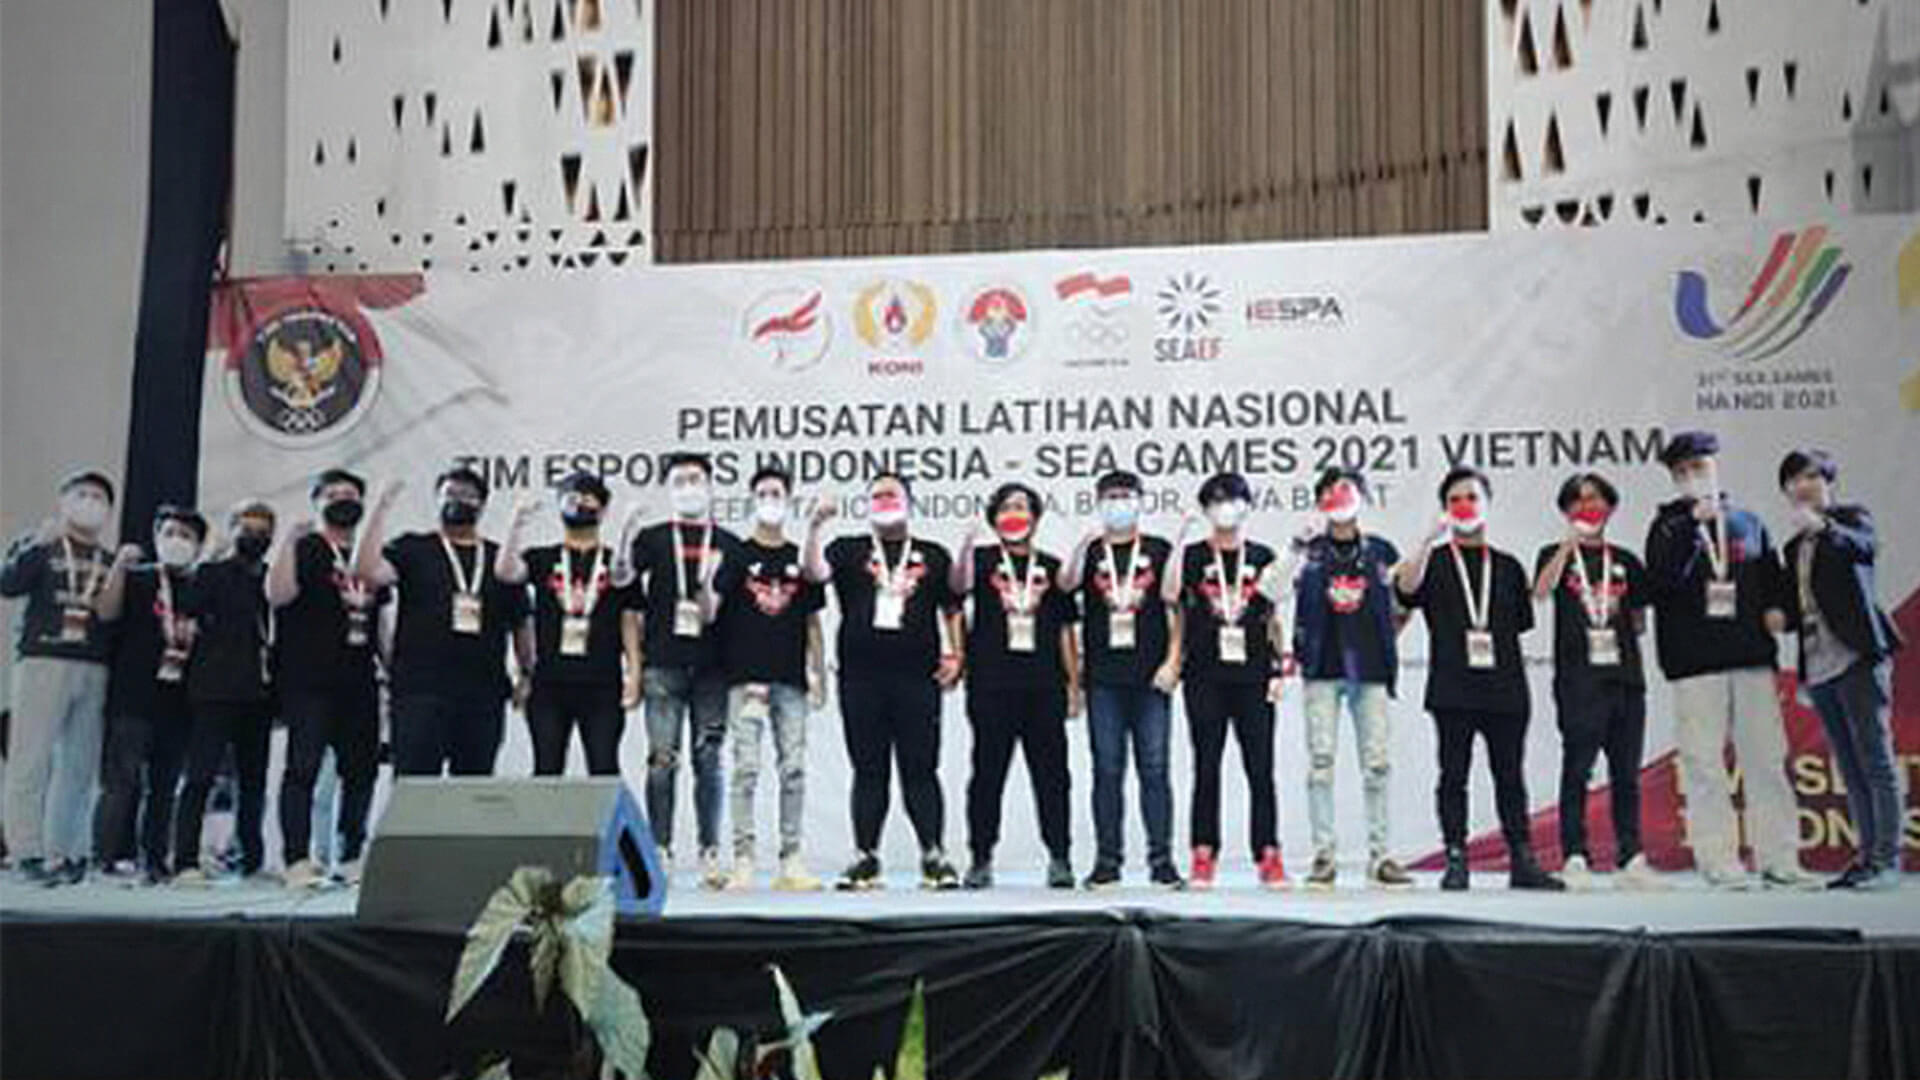 Indonesia Kirim Atlet di 6 Nomor Cabor e-Sports SEA GAMES Vietnam